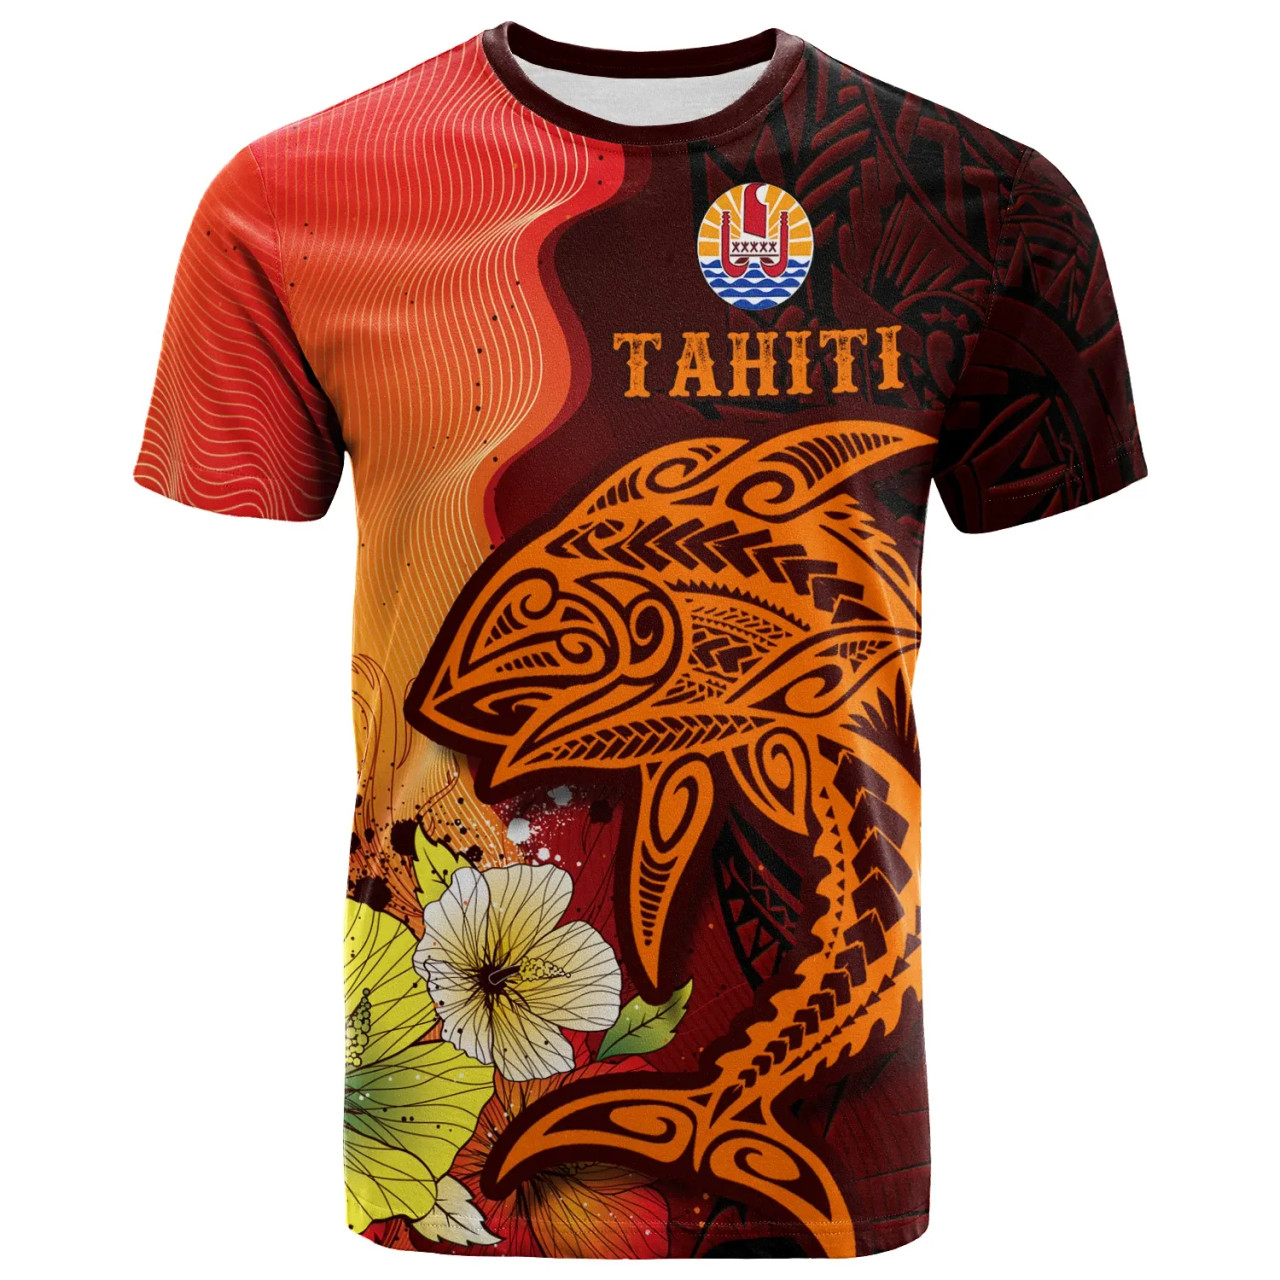 Tahiti Custom Personalised T-Shirt - Tribal Tuna Fish 1